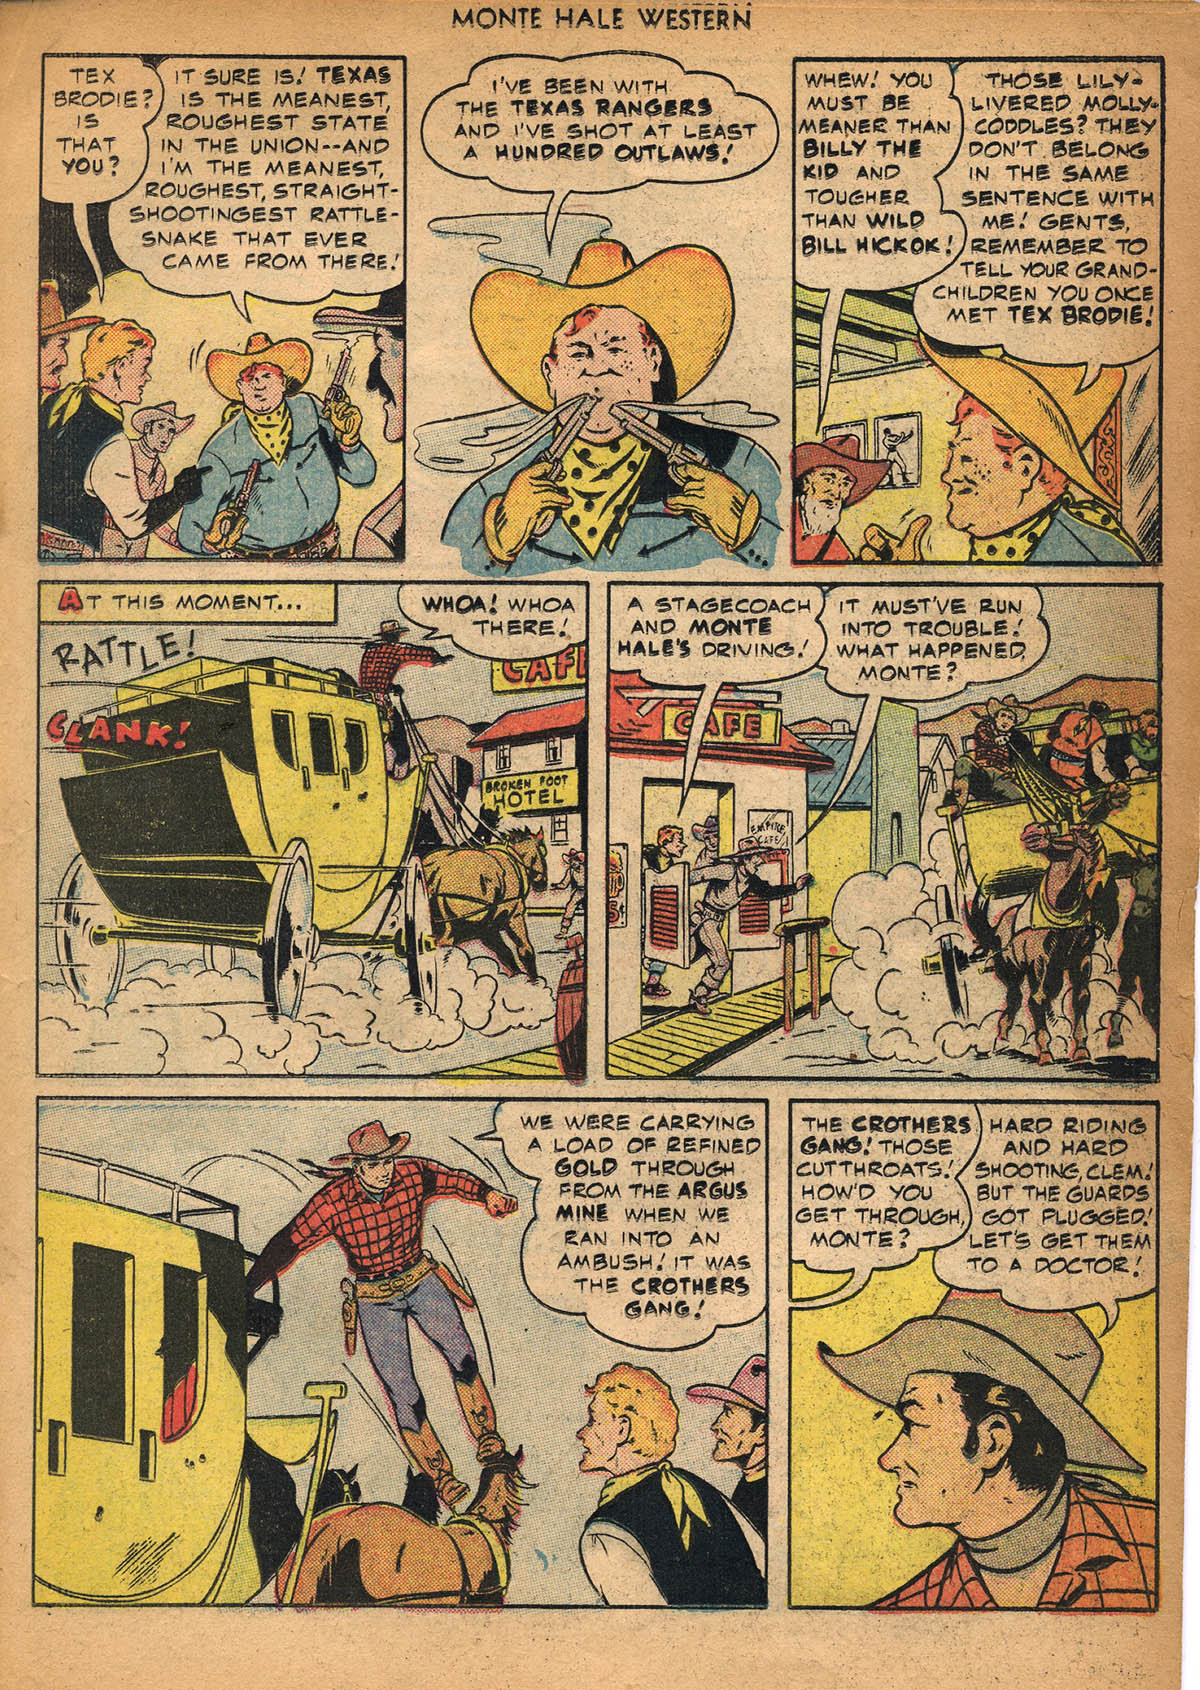 Read online Monte Hale Western comic -  Issue #44 - 28